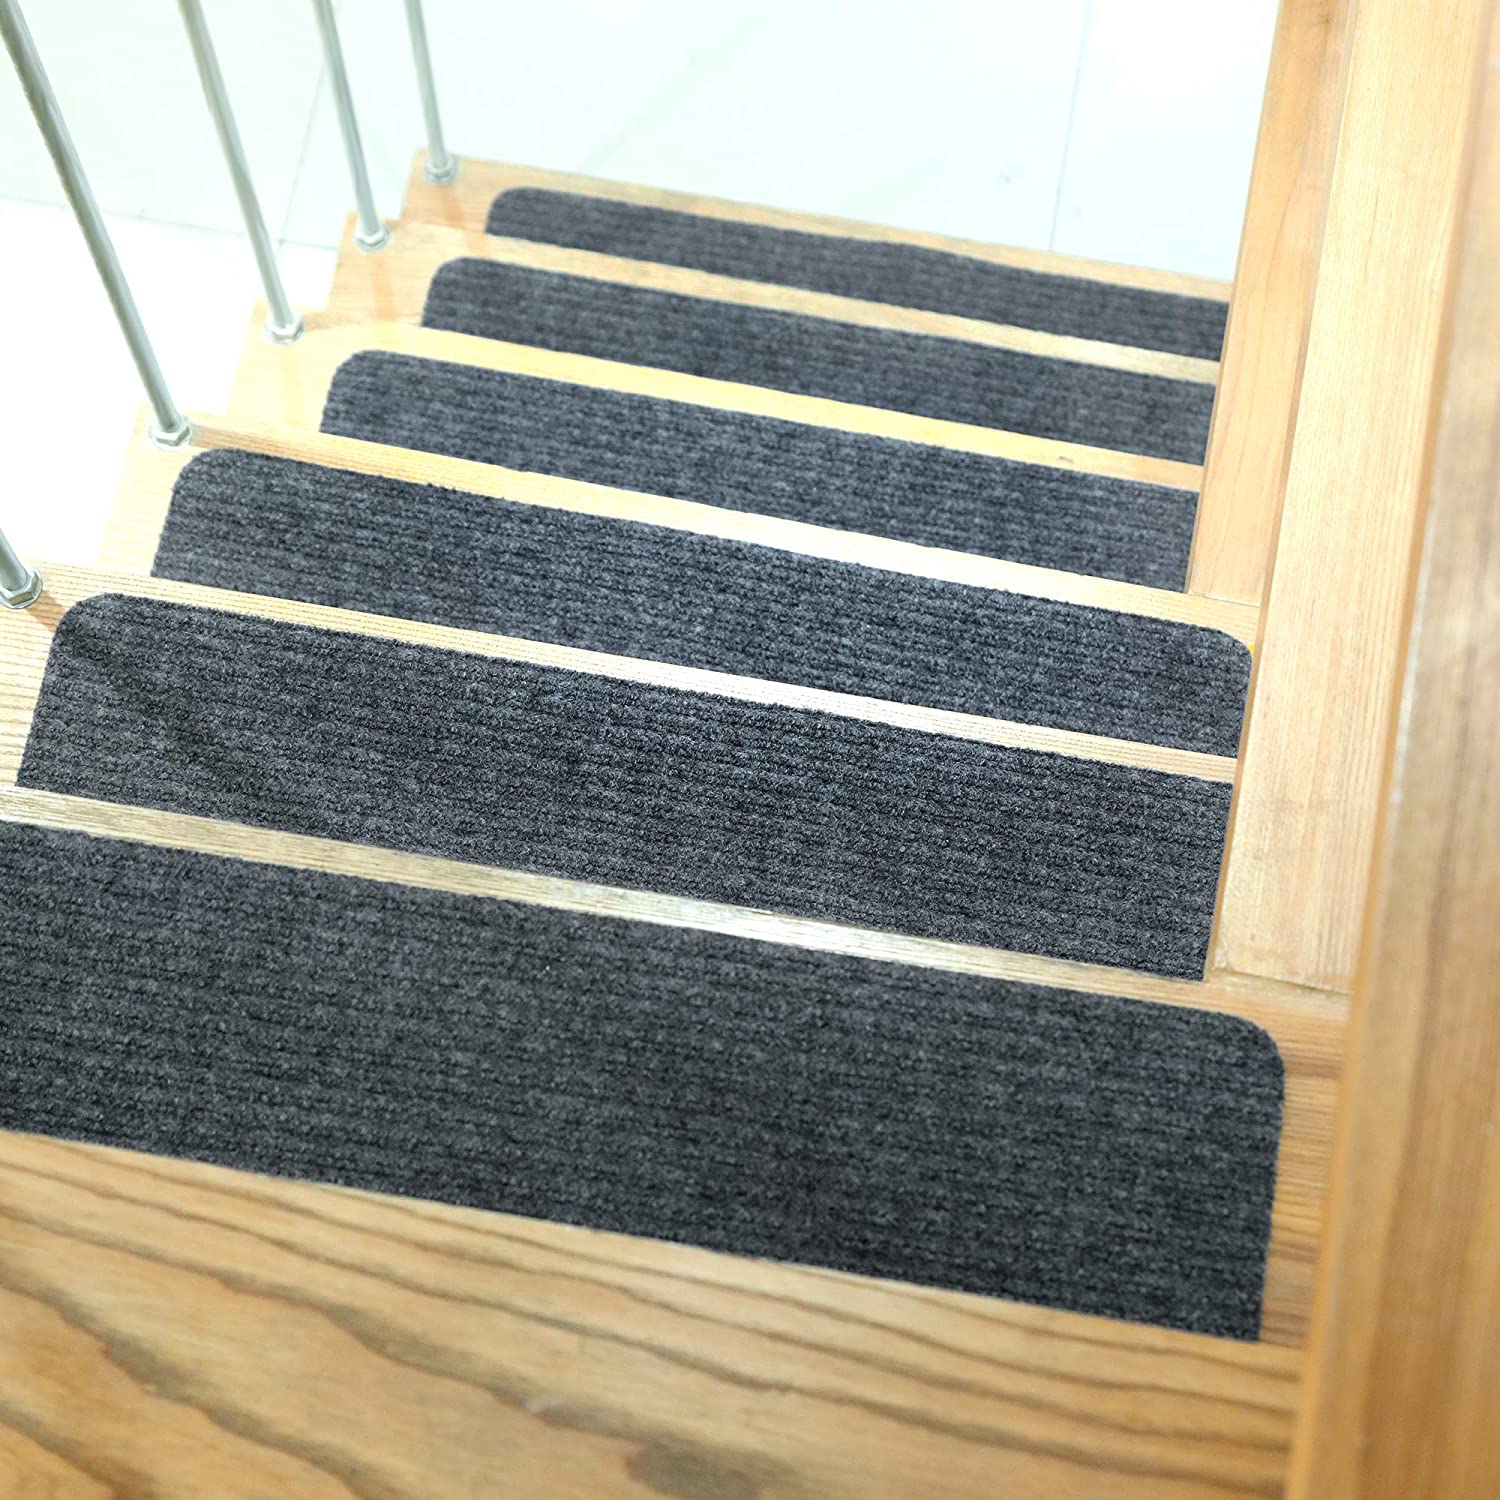 Wool Blend Fabric Stair Non-slip Tread Mat